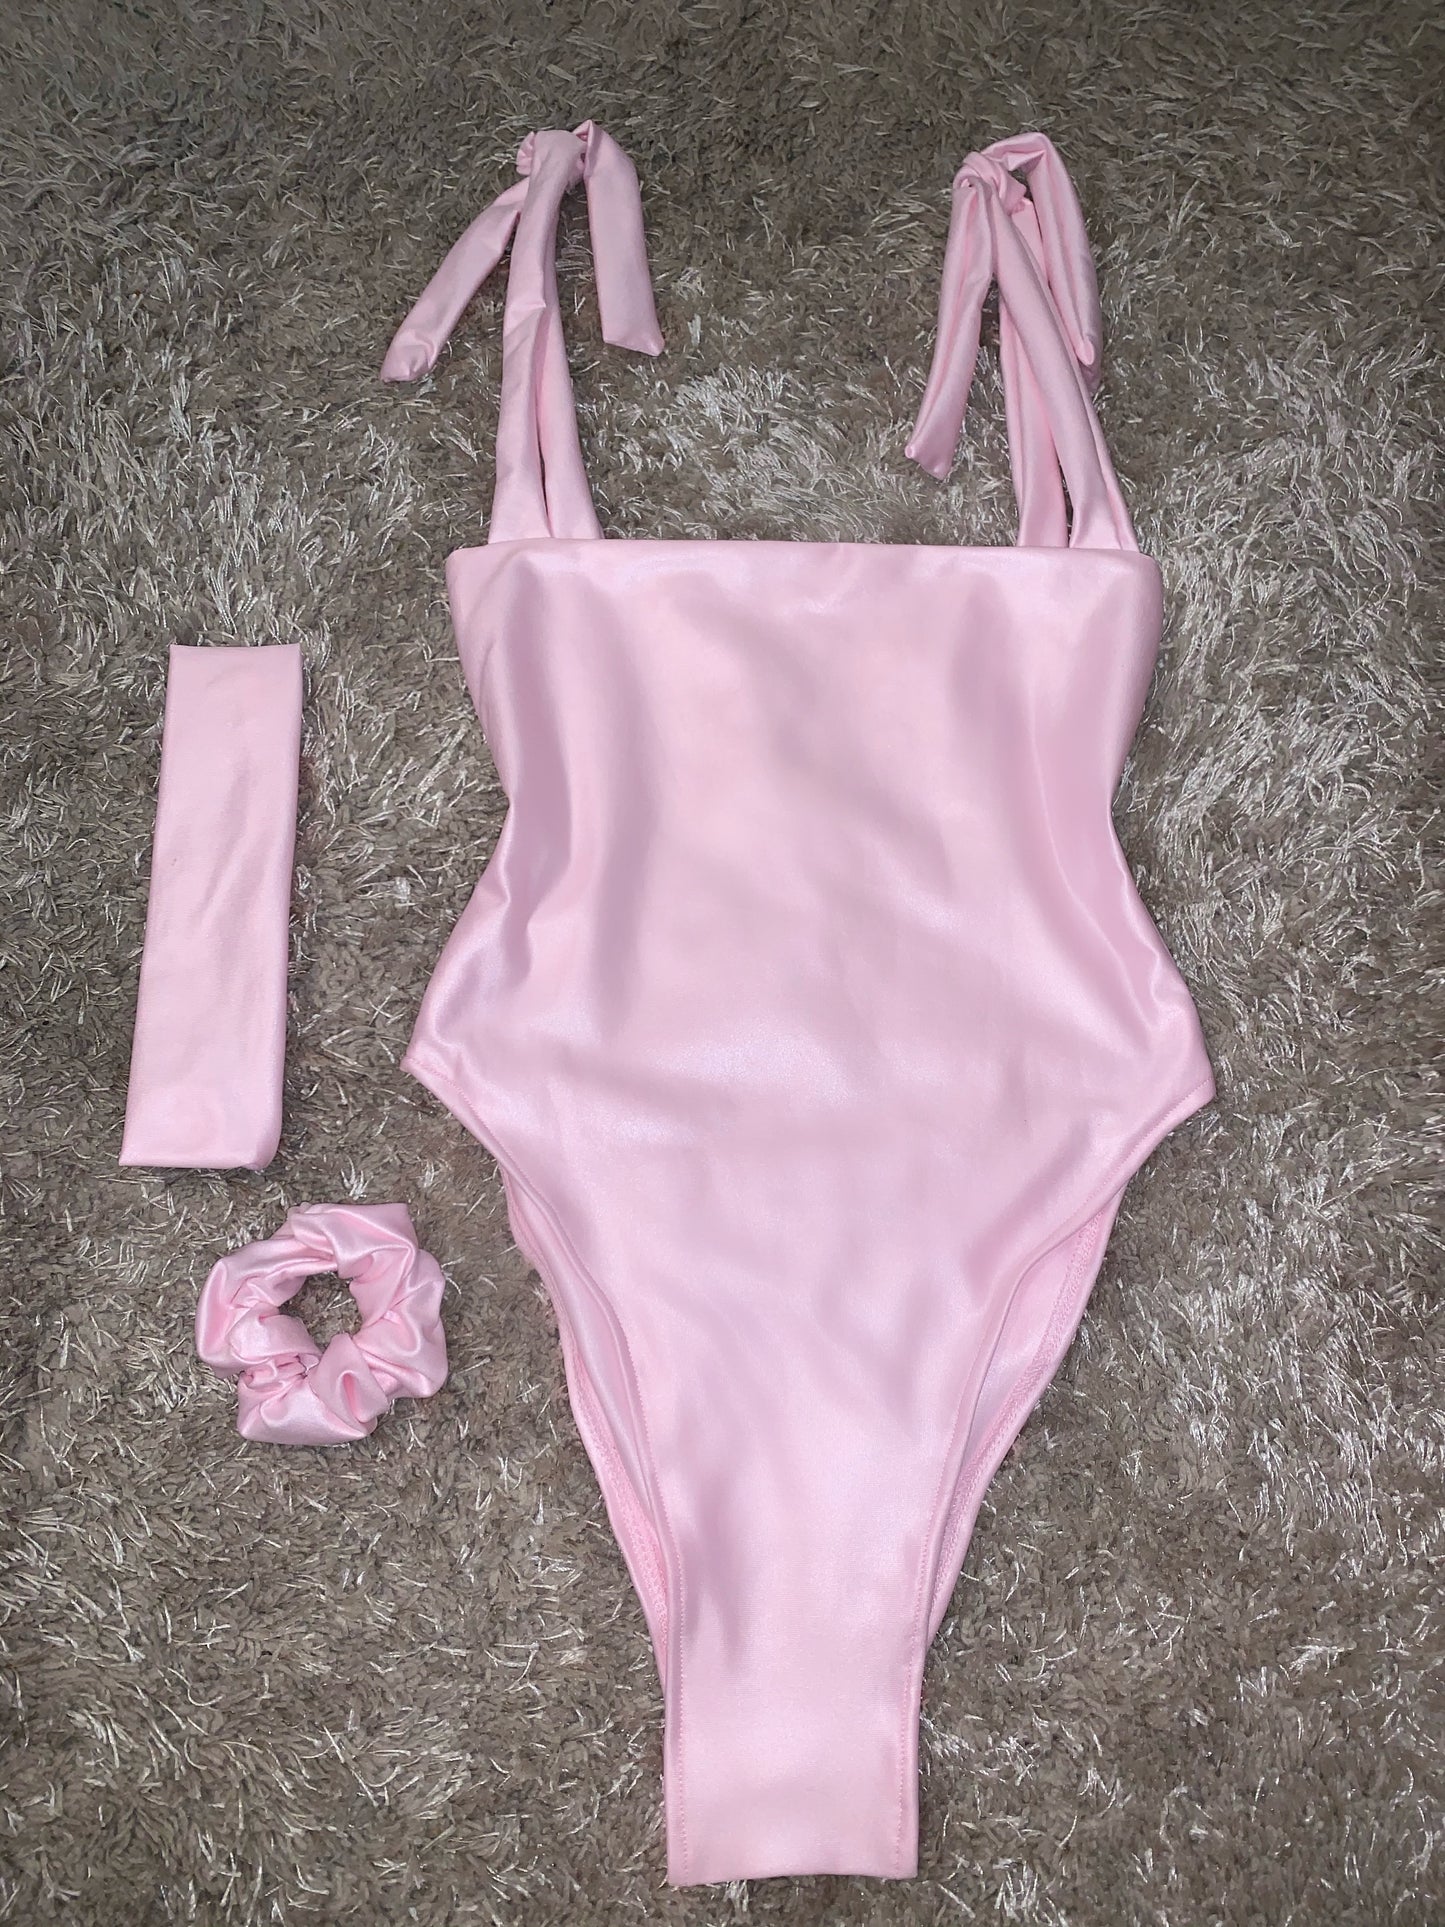 SALE Wet Look Pink Swimsuit 6 Petite